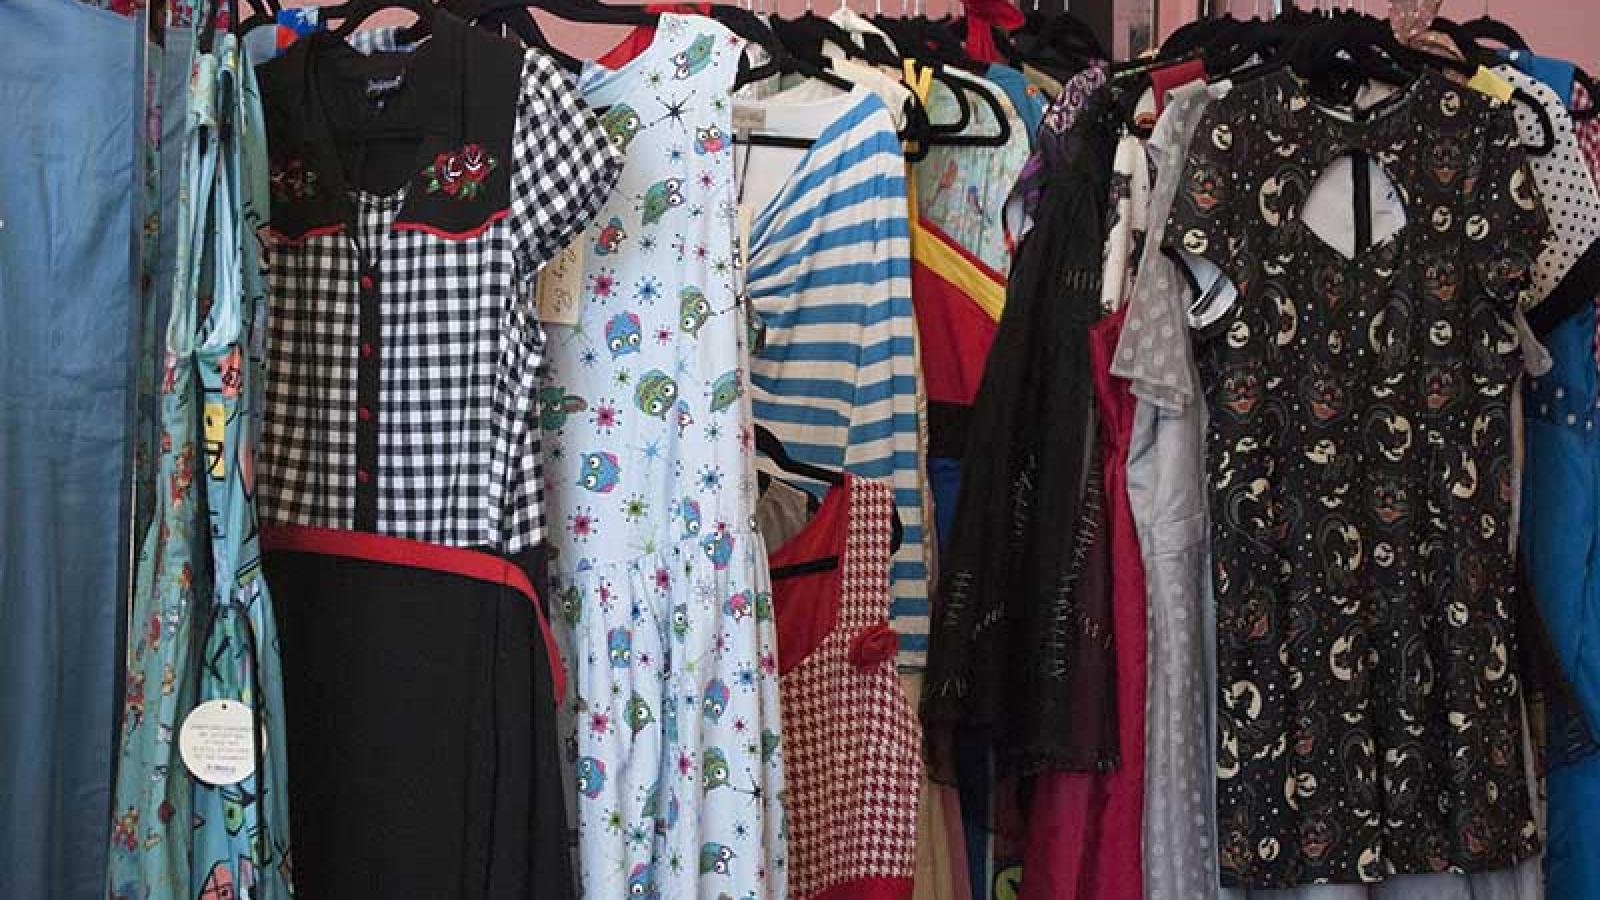 row of dresses on hangers